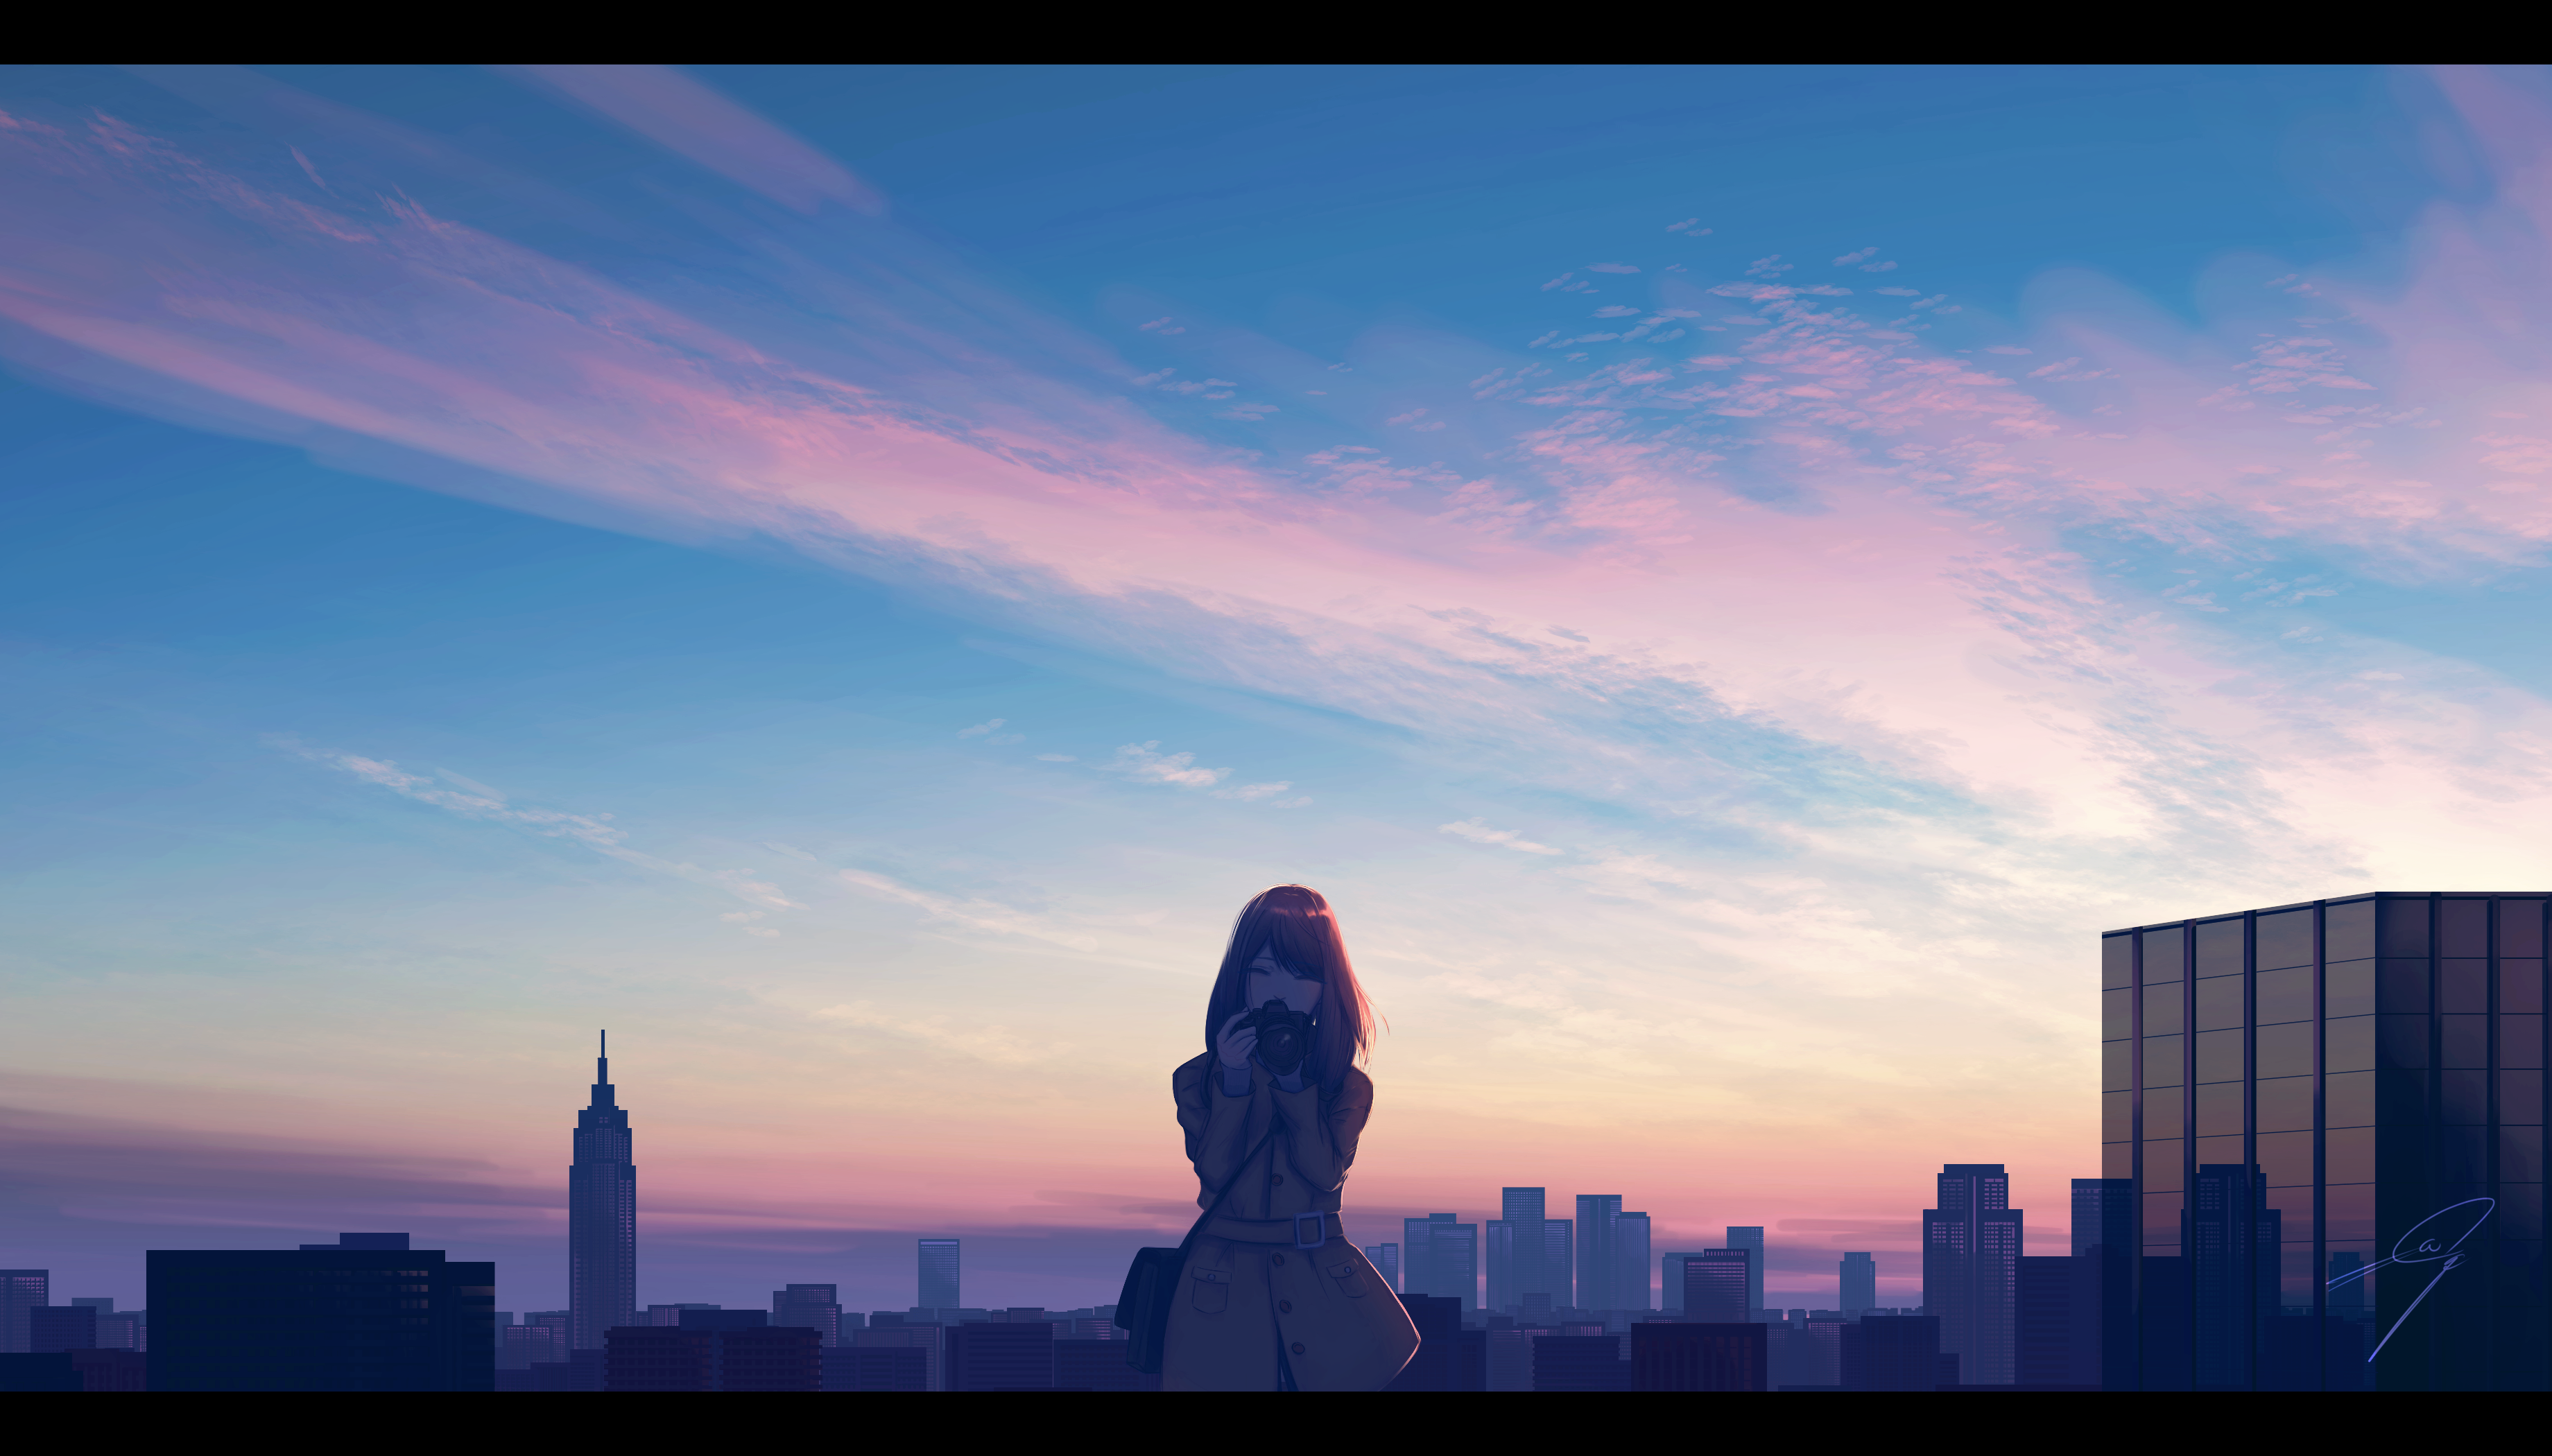 Anime Anime Girls Artwork Twilight Sunset Clouds City Skyline Empire State Building New York City Ma 3680x2100